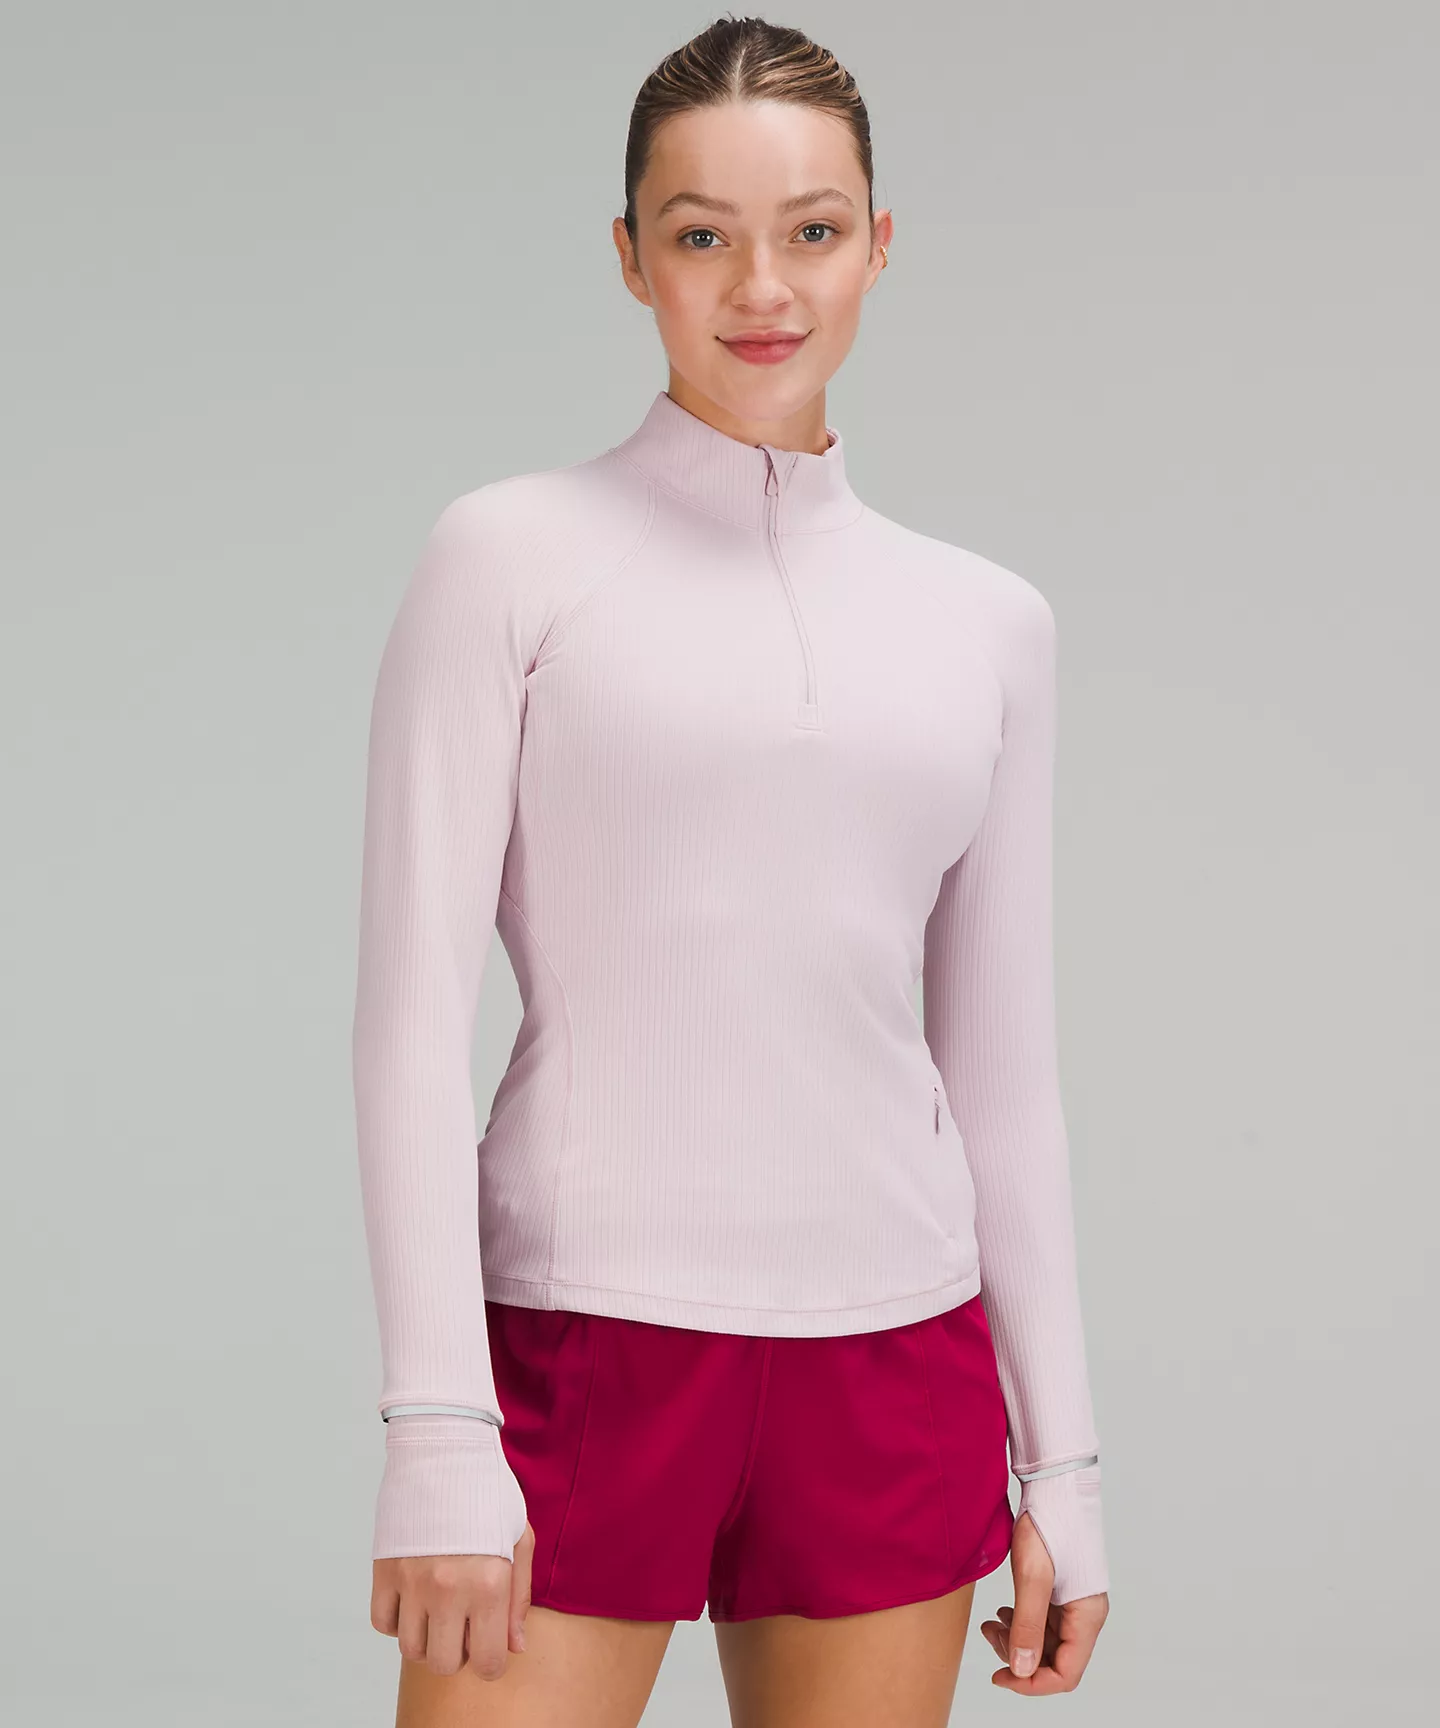 it’s rulu half-zip pullover - pink peony- lululemon rulu pullover